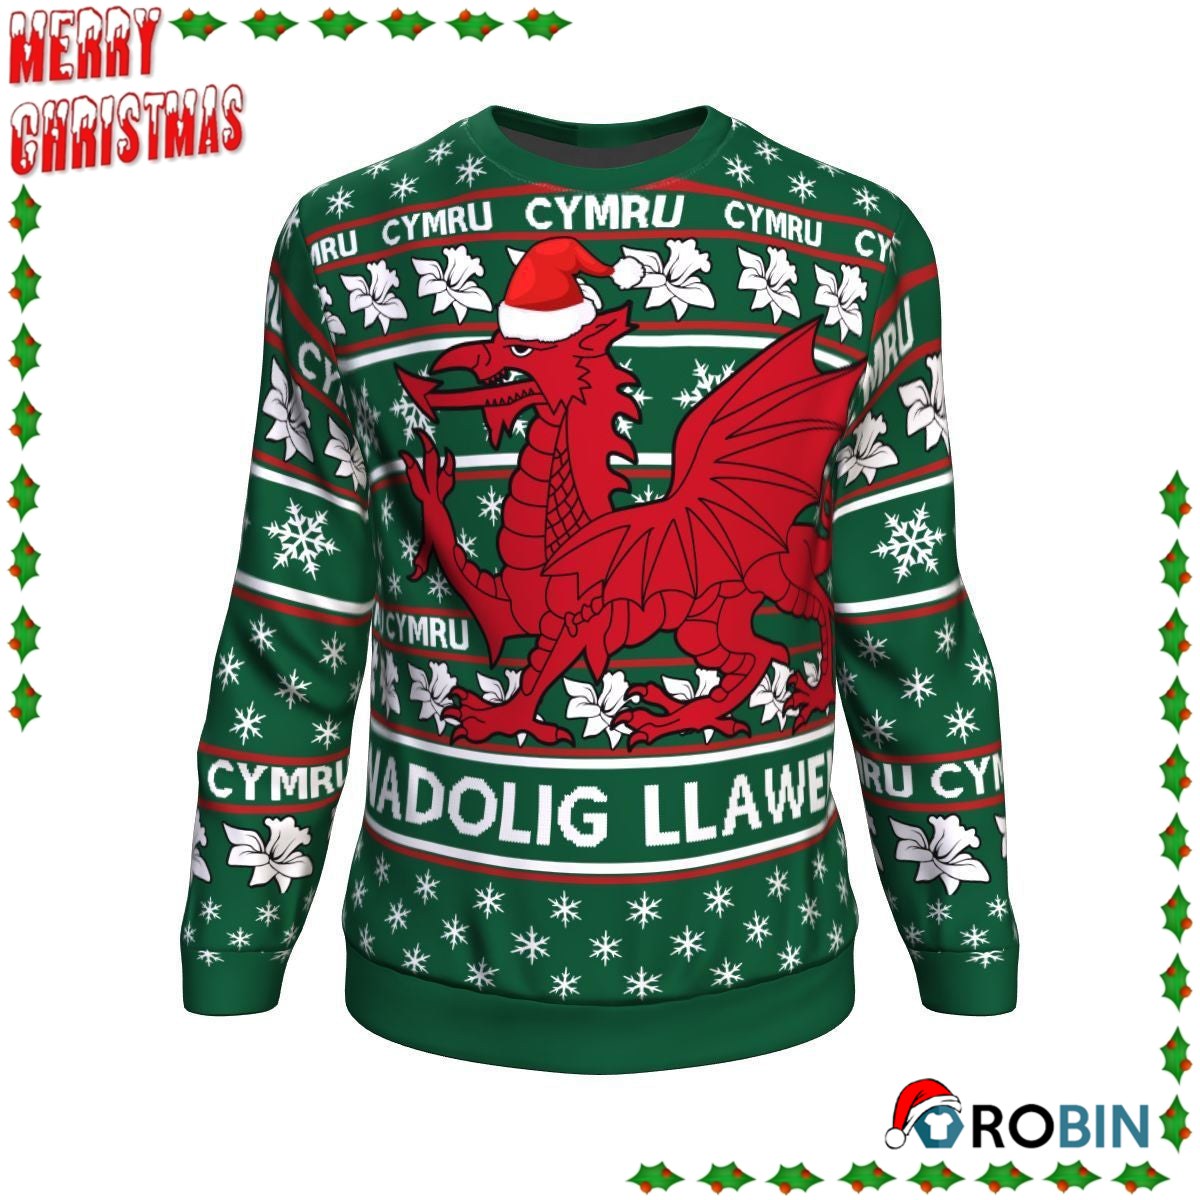 wales-merry-christmas-all-over-ugly-sweatshirt-sweater-robinplacefabrics